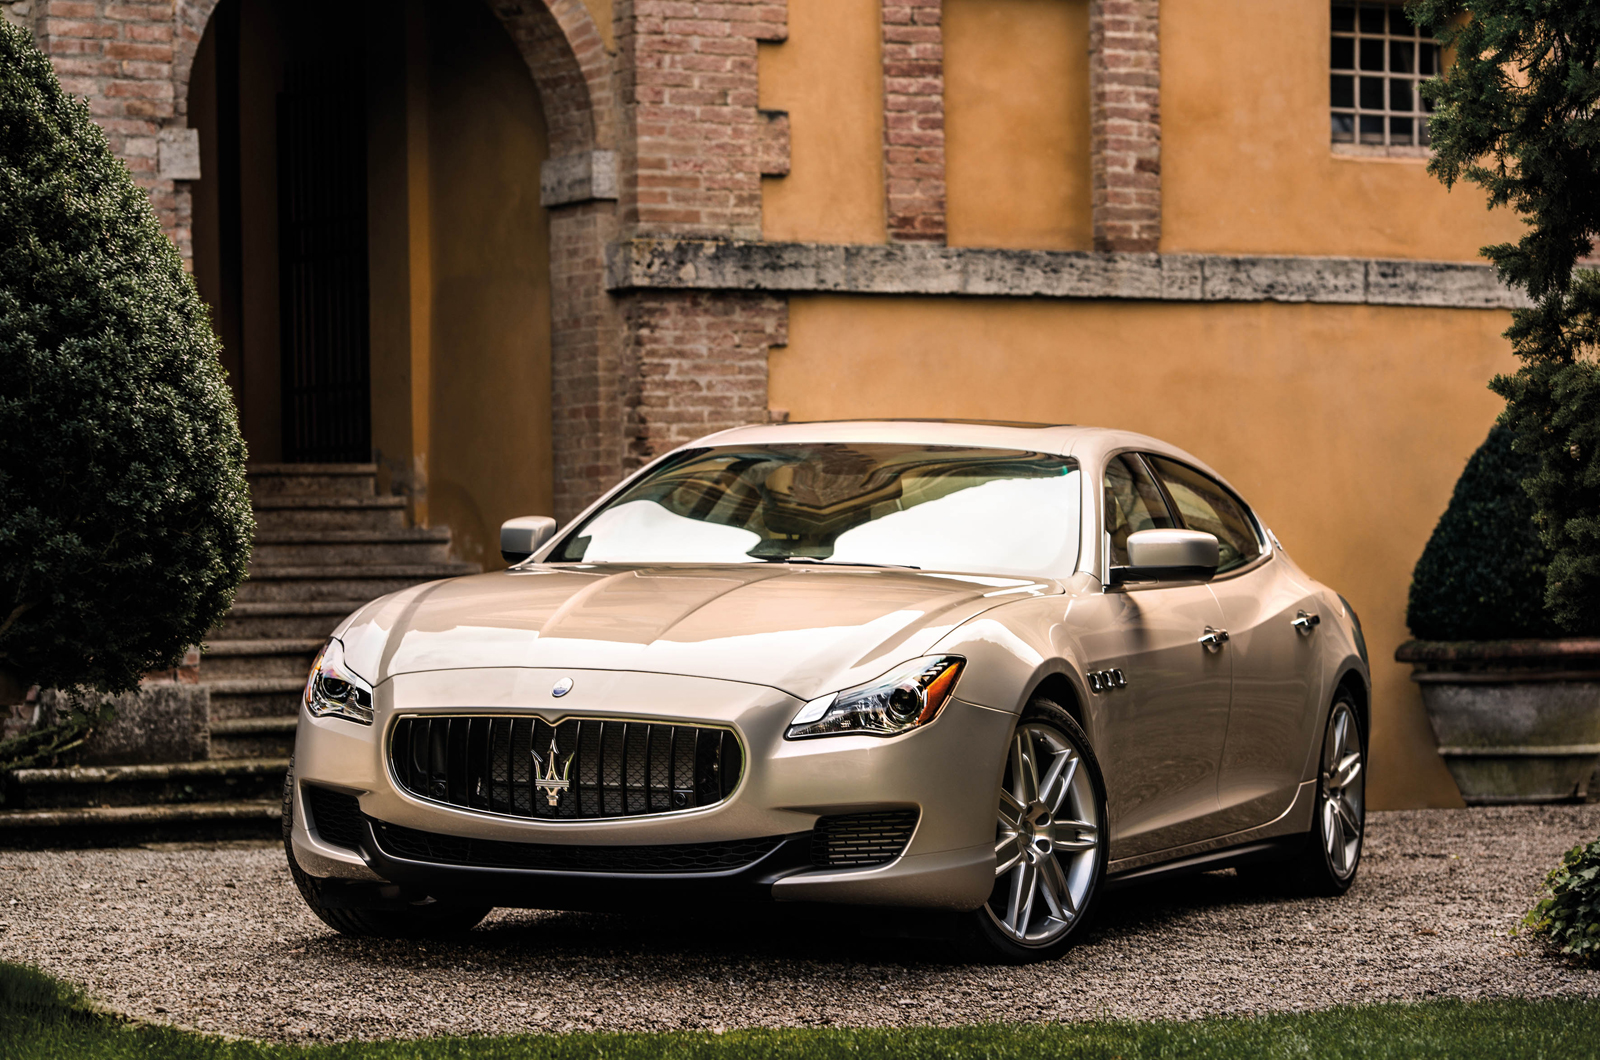 First drive review: 2013 Maserati Quattroporte V8 Review ...